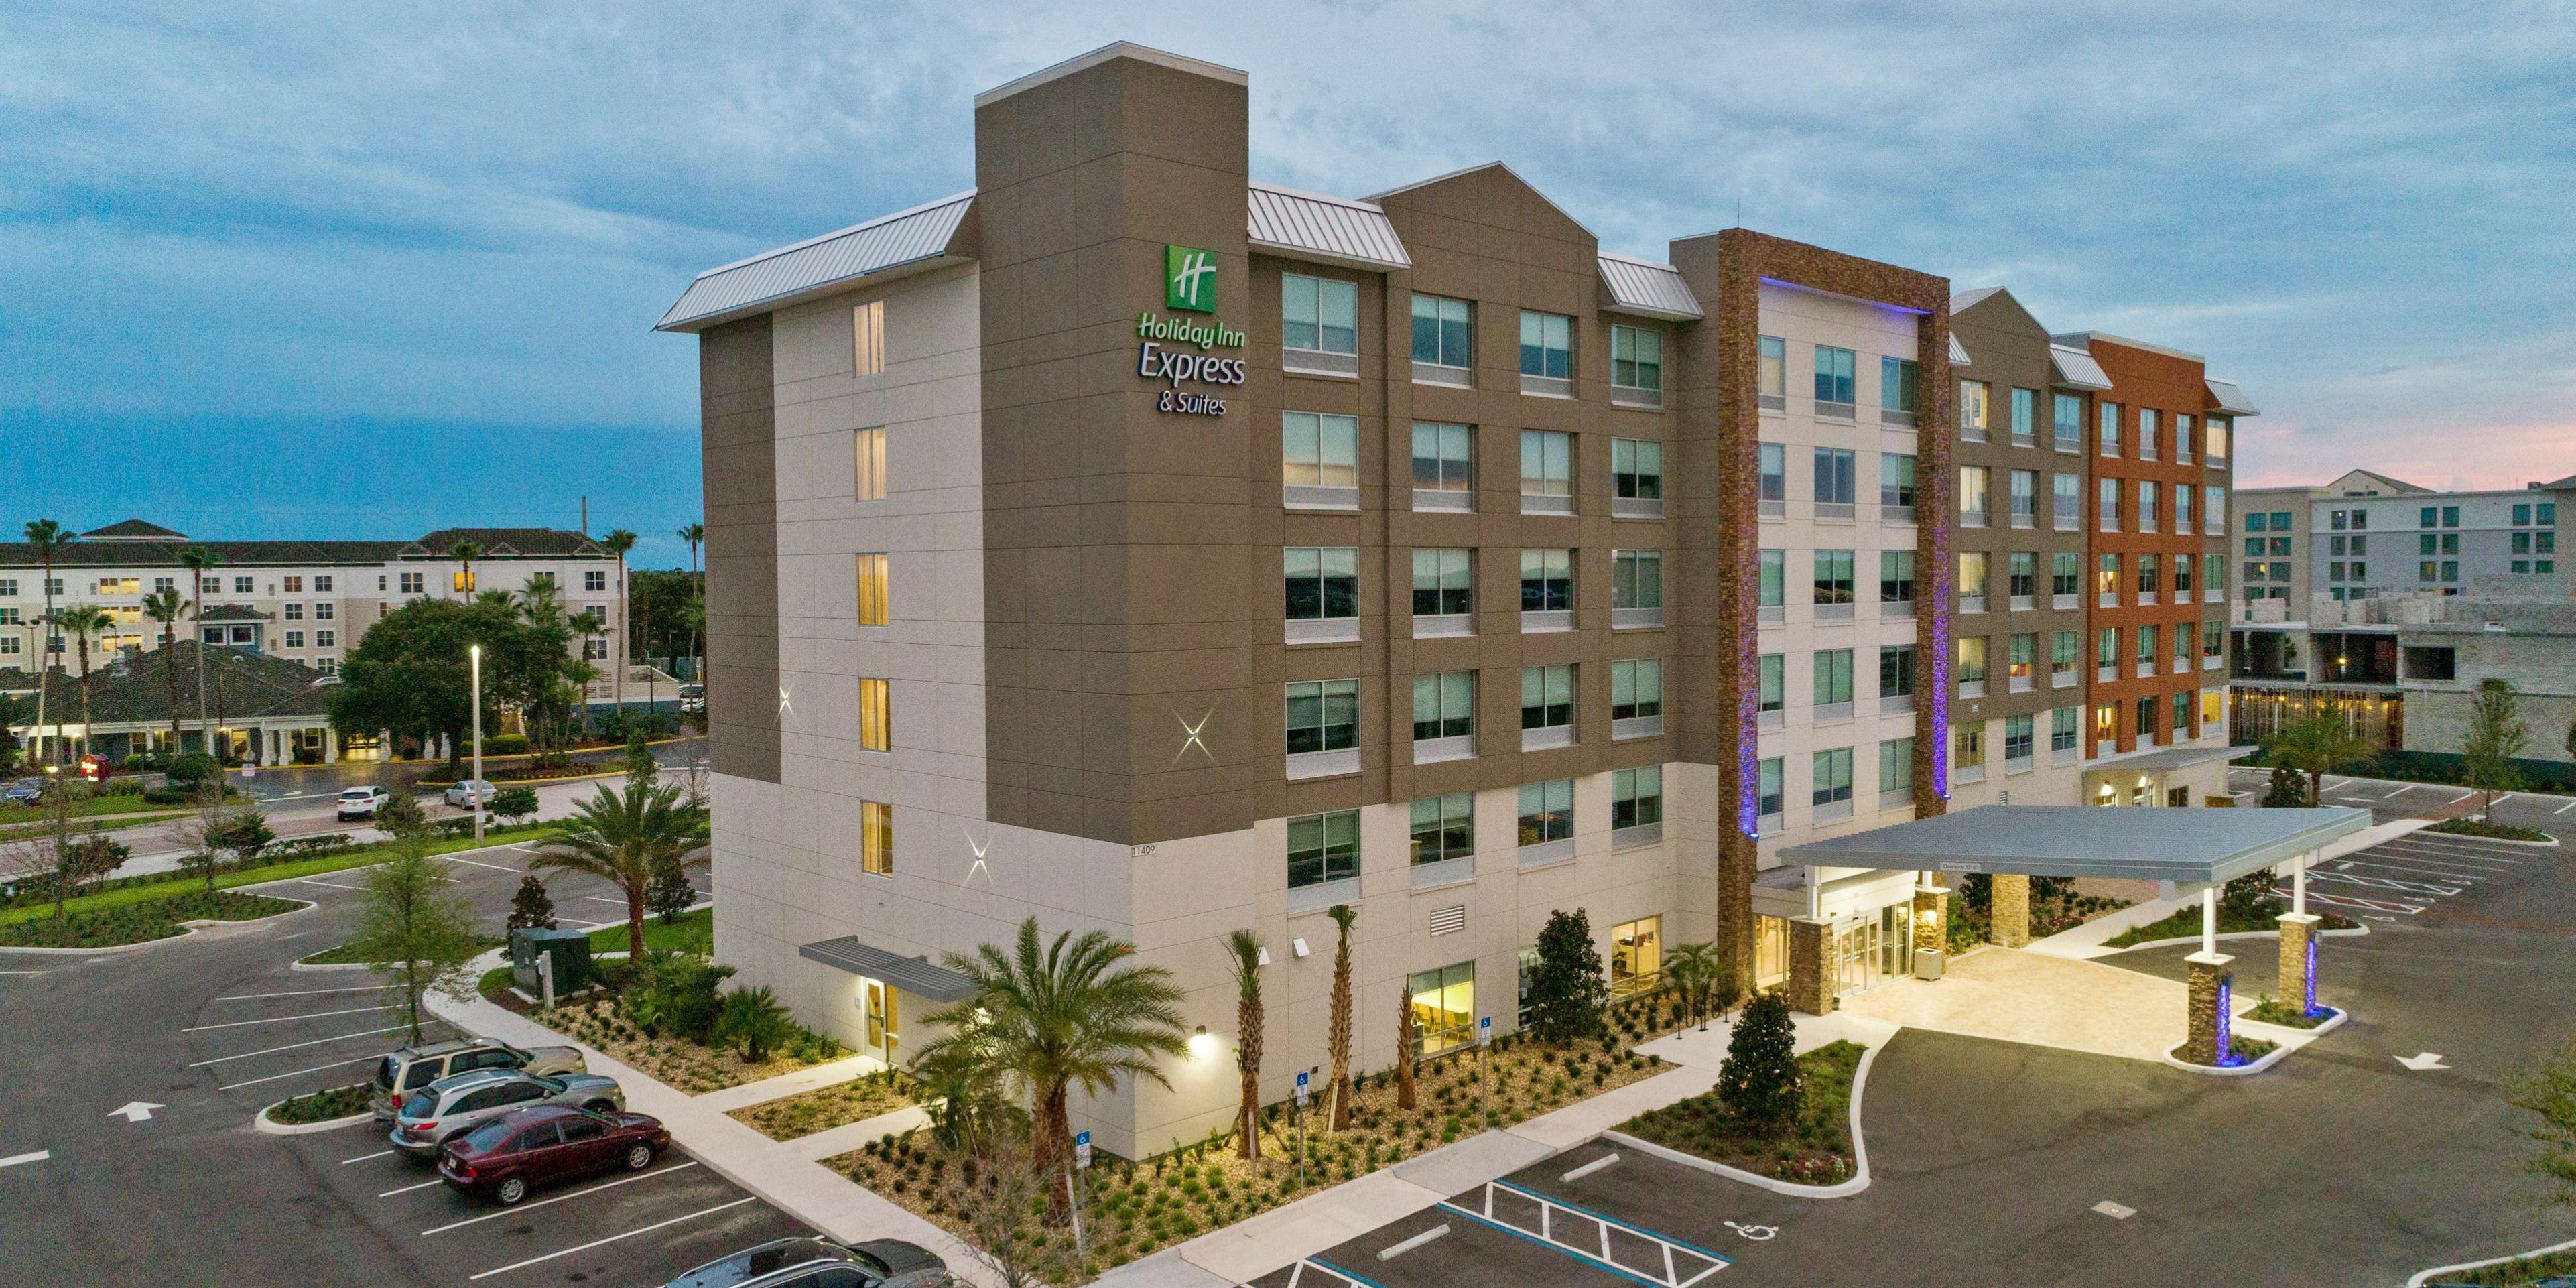 Photo of Holiday Inn Express & Suites Orlando - Lake Buena Vista, Orlando, FL